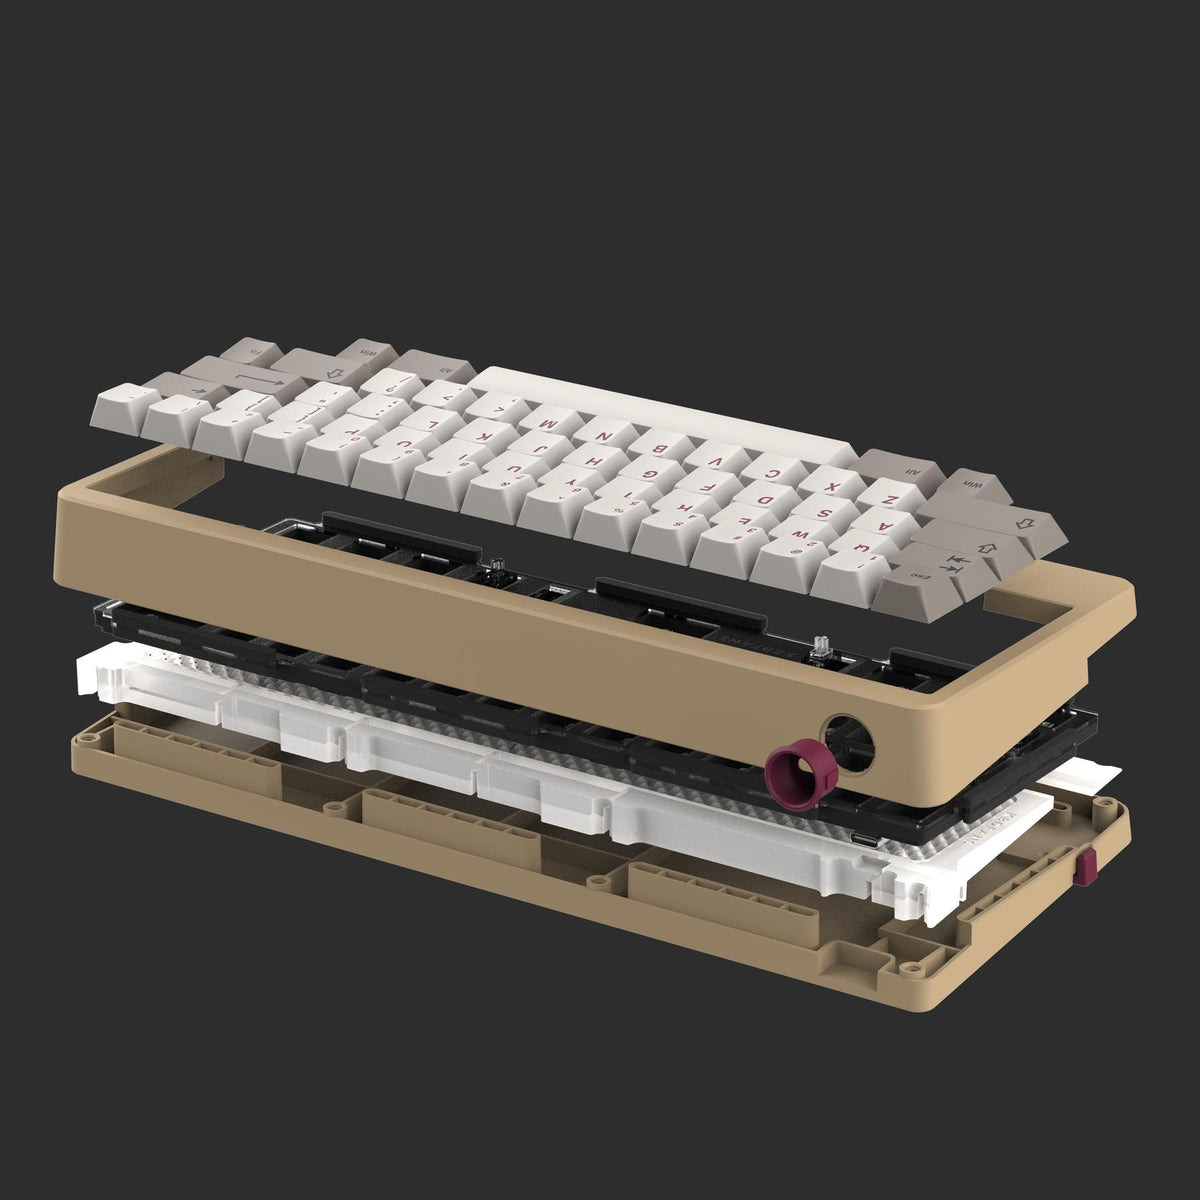 D60Lite x ePBT 6085 Keyboard Kit